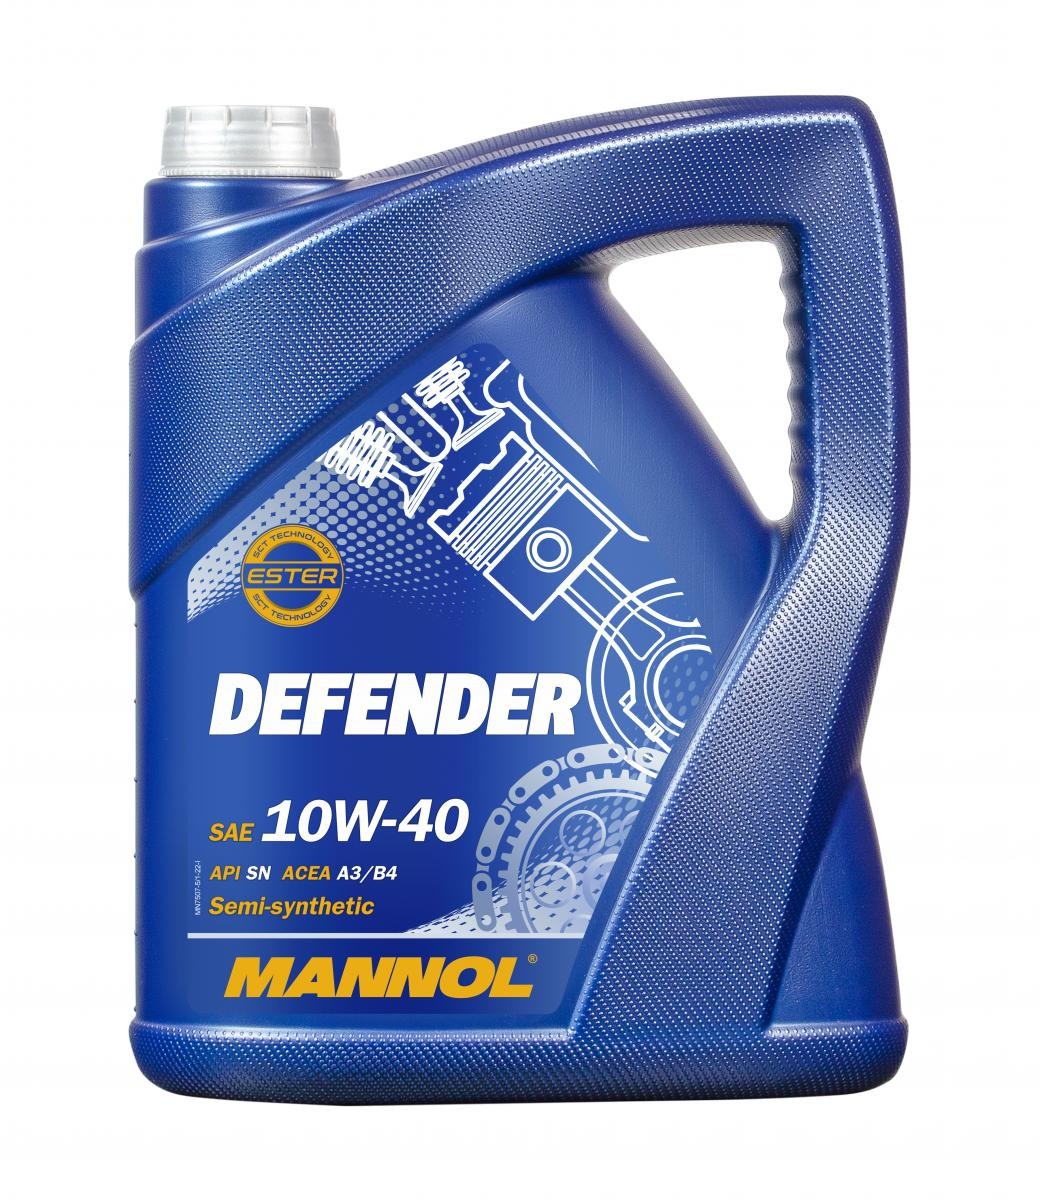 MN7507-5 MANNOL DEFENDER 10W-40, 5L, Deels synthetische olie Motorolie MN7507-5 koop goedkoop